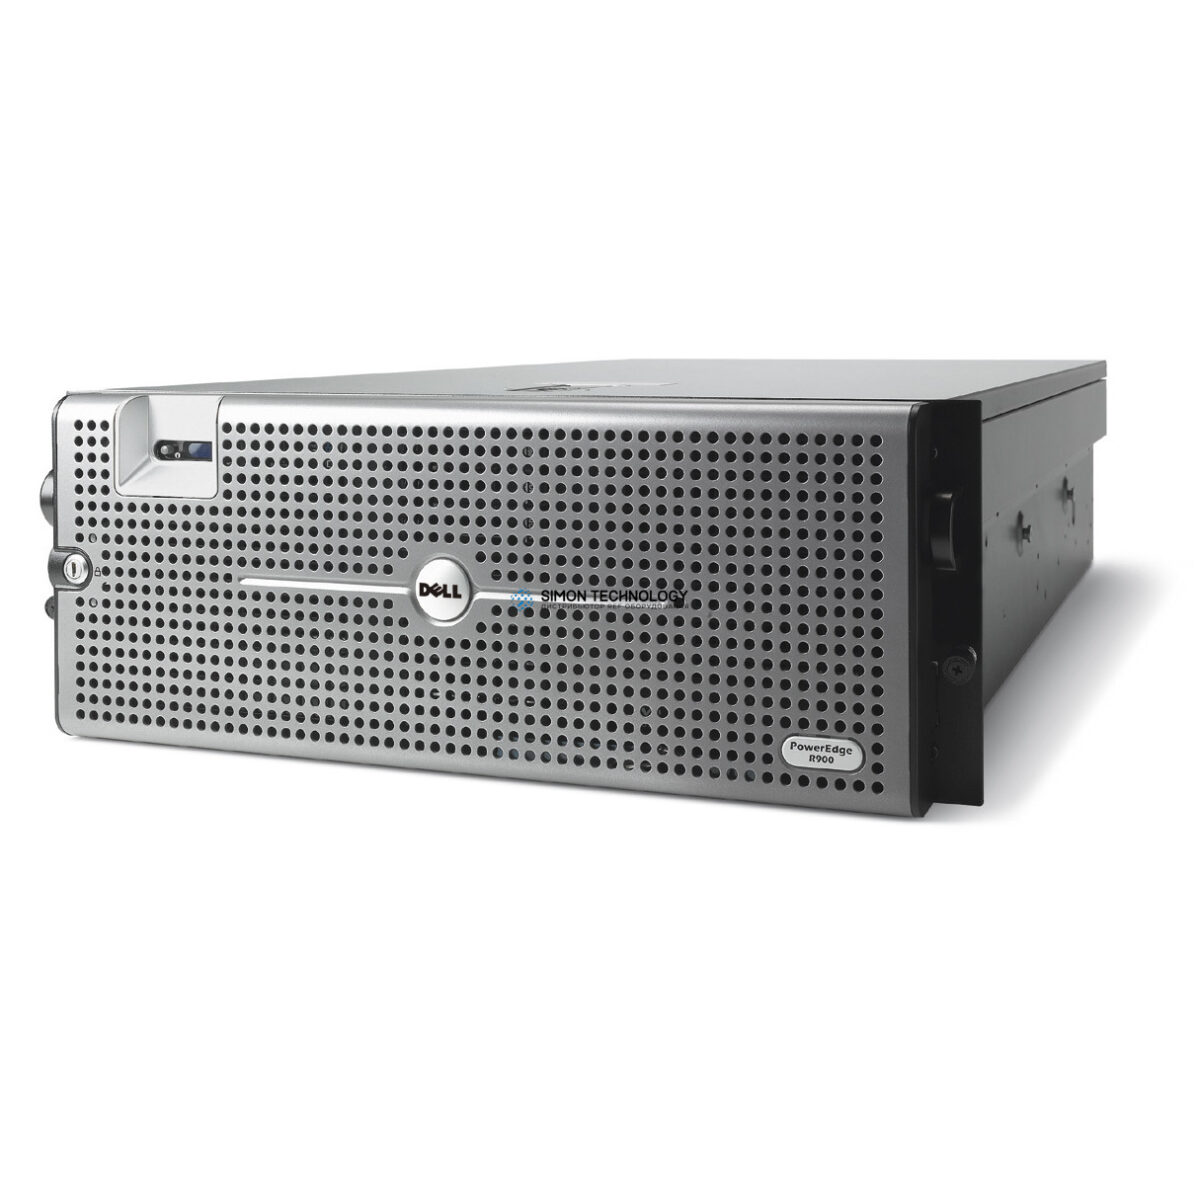 Сервер Dell PER900 X7350 4P 32GB PERC 6/I DUAL PSU 5 LFF DVD (R900-X7350)